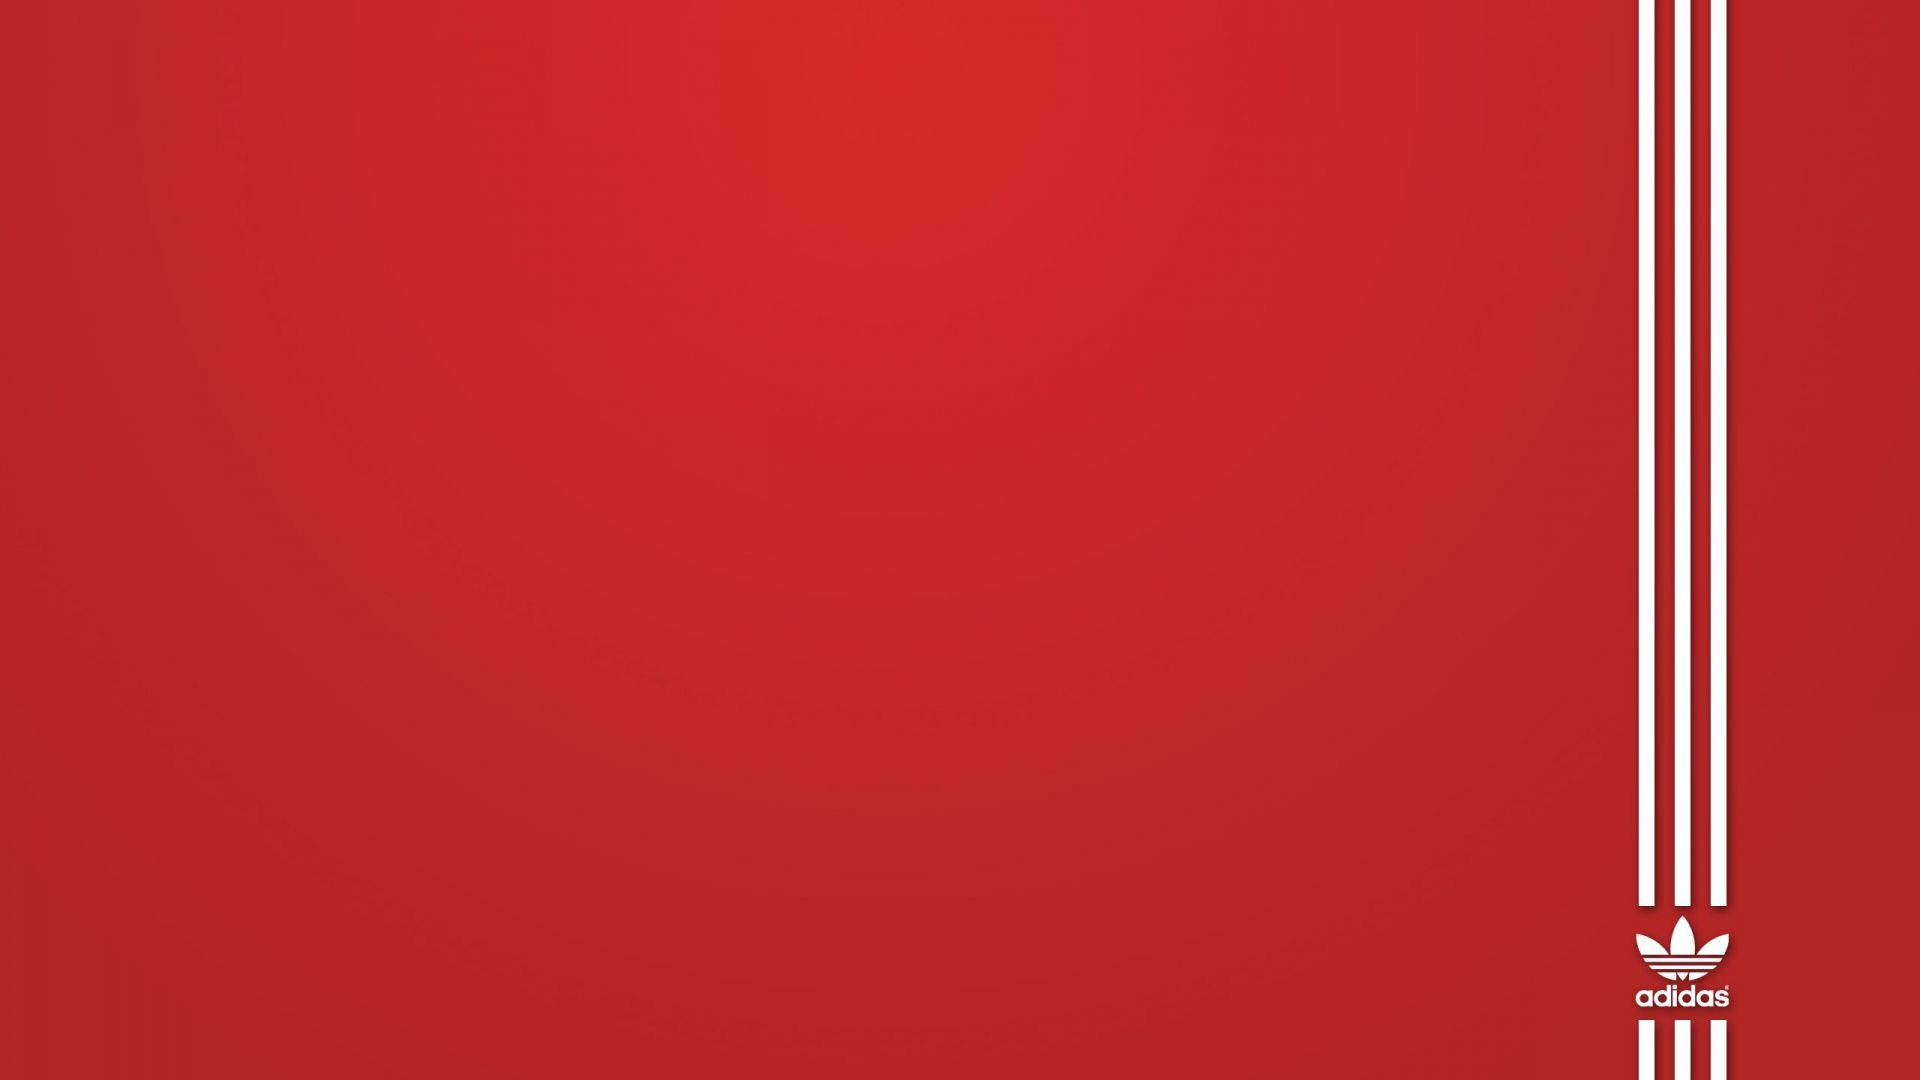 Minimalist Red Adidas Logo Background